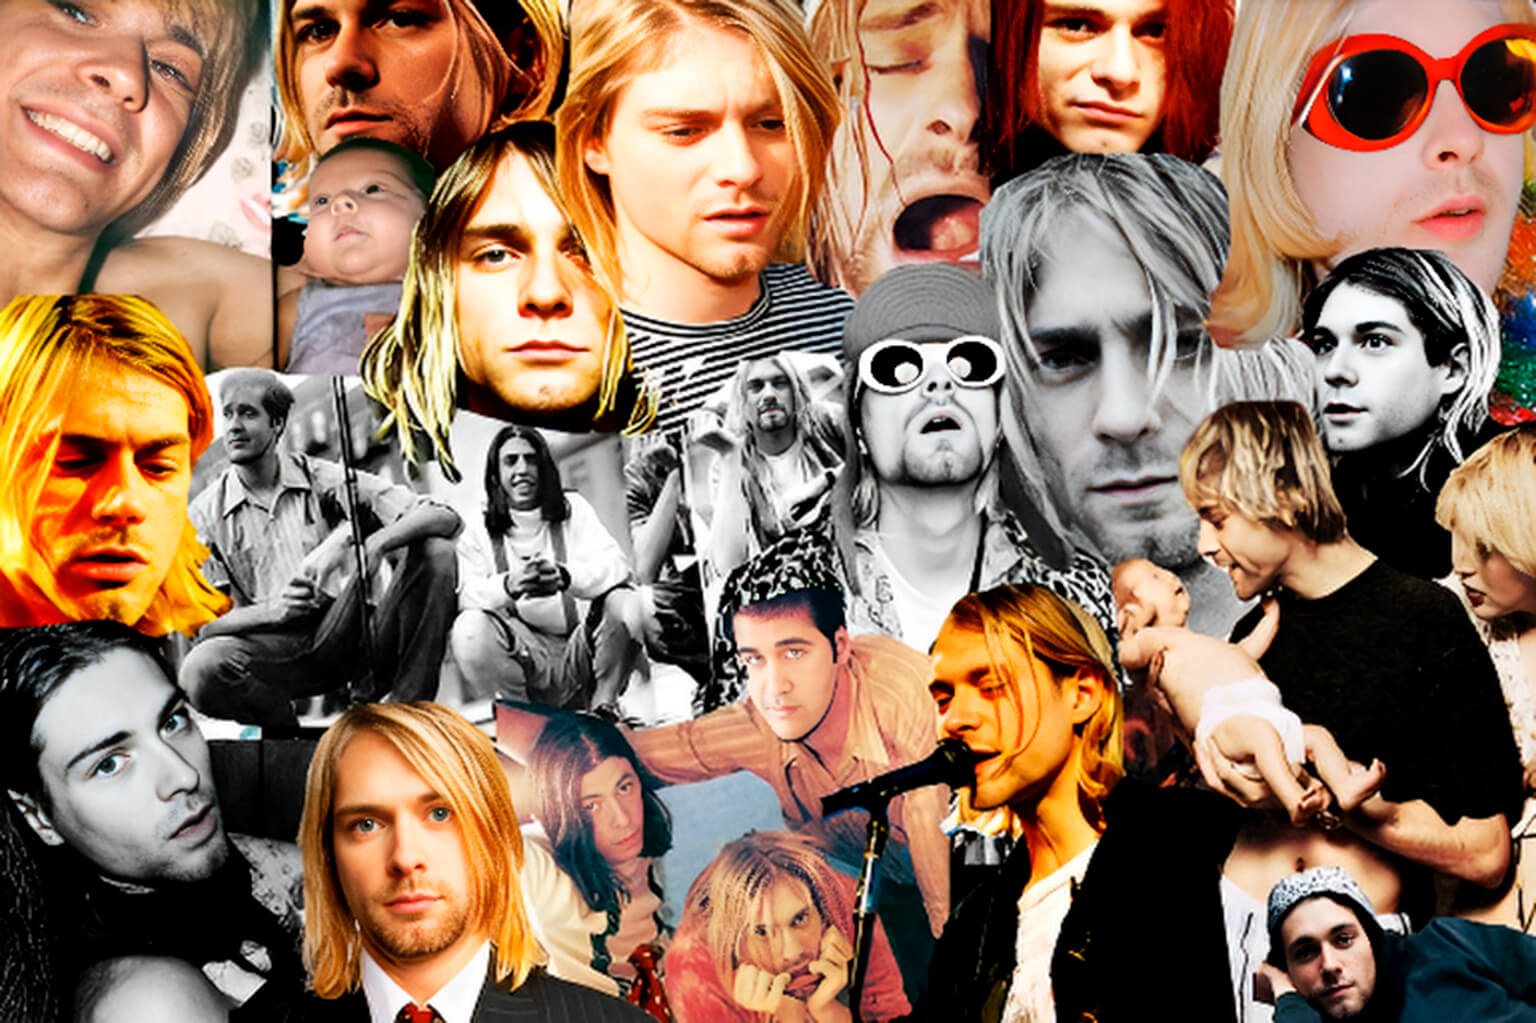 collage of photos of Kurt Cobain from Nirvana